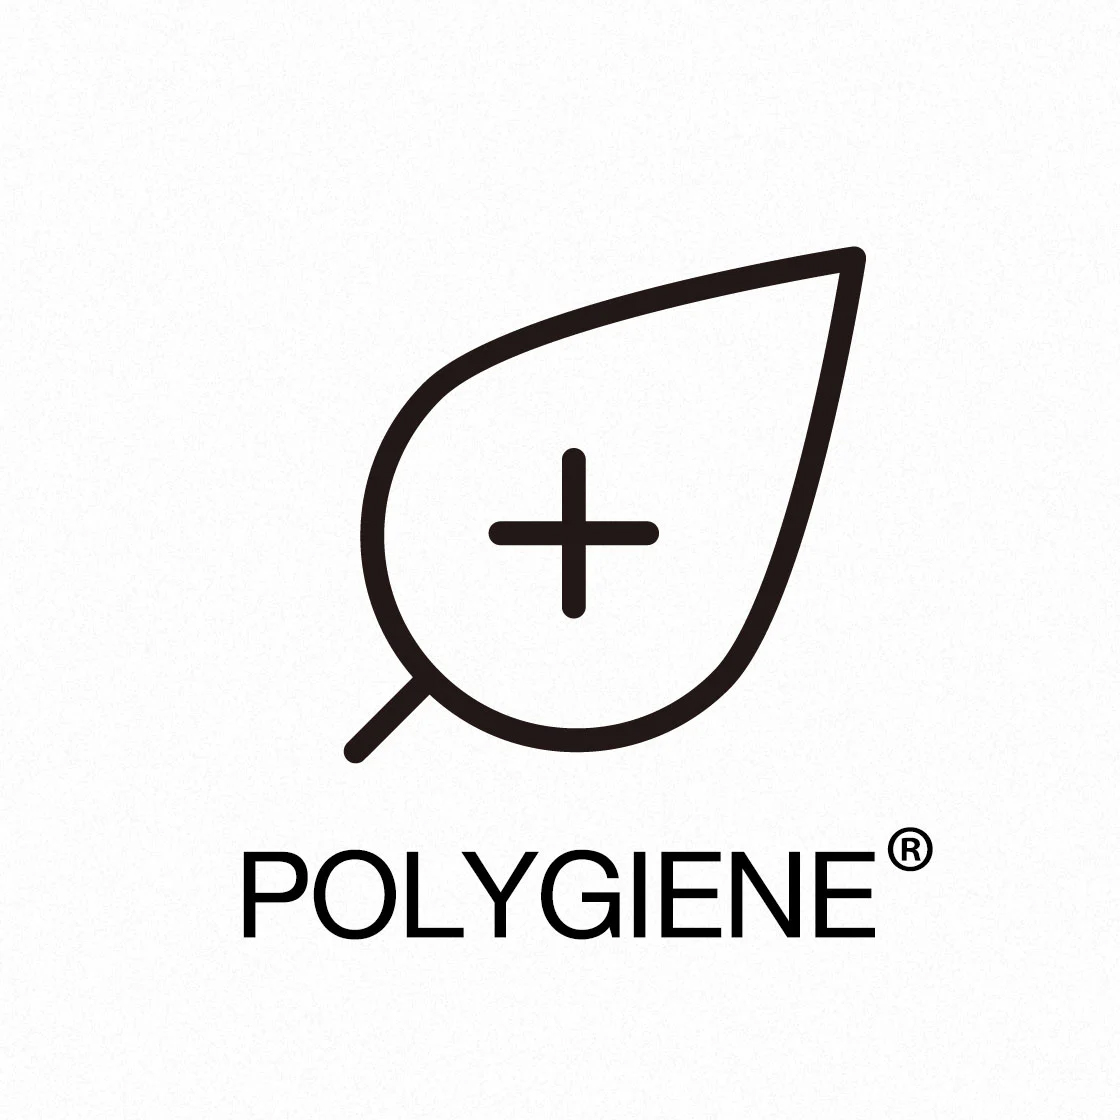 Polygiene(R) Apparel Technology Image